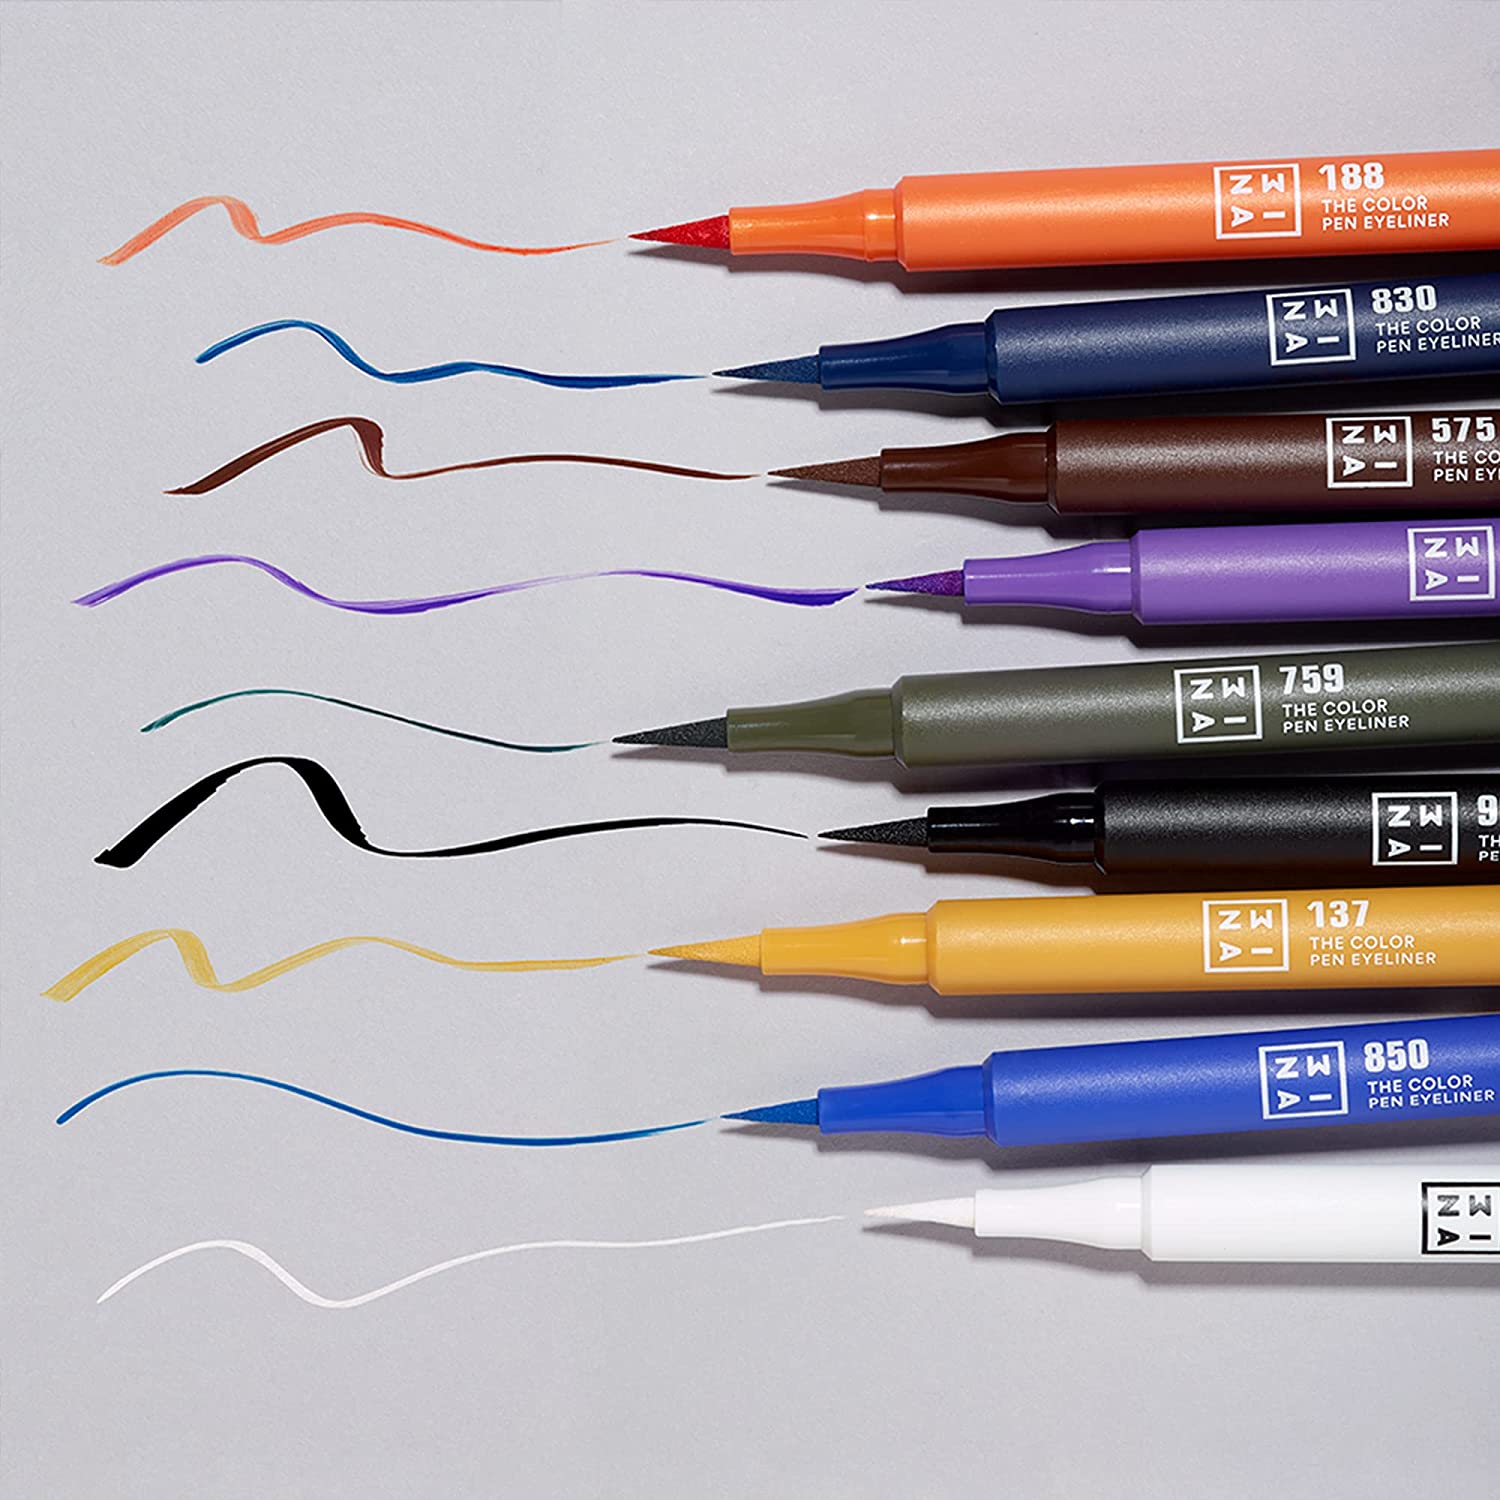 3INA The Color Pen Felt Tip Eyeliner Filzspitze bunter Lidstrich